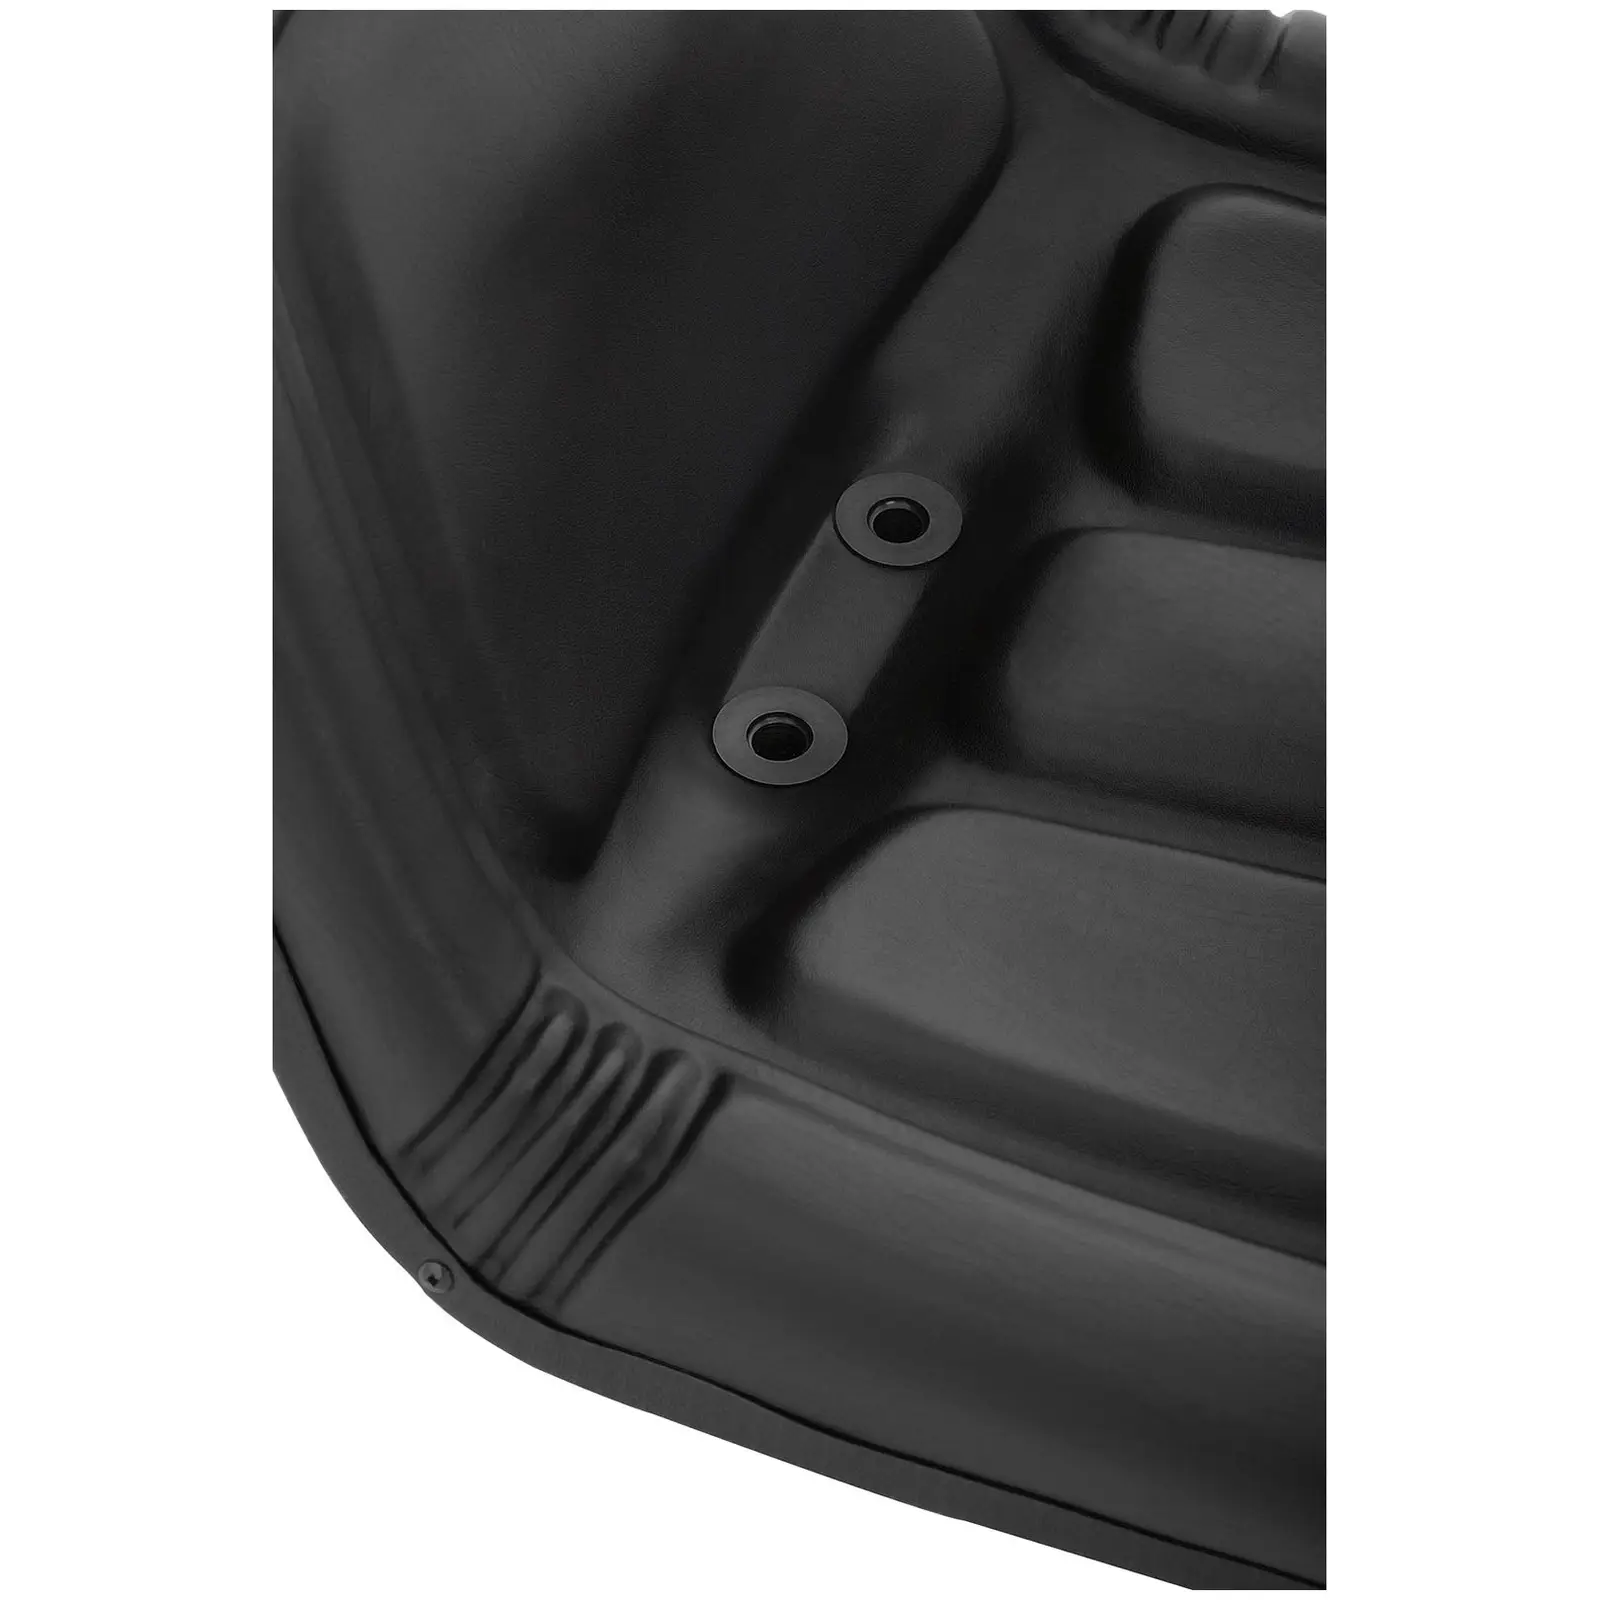 Traktorsitz - Schleppersitz - 50 x 48,5 cm - Drainagebohrung